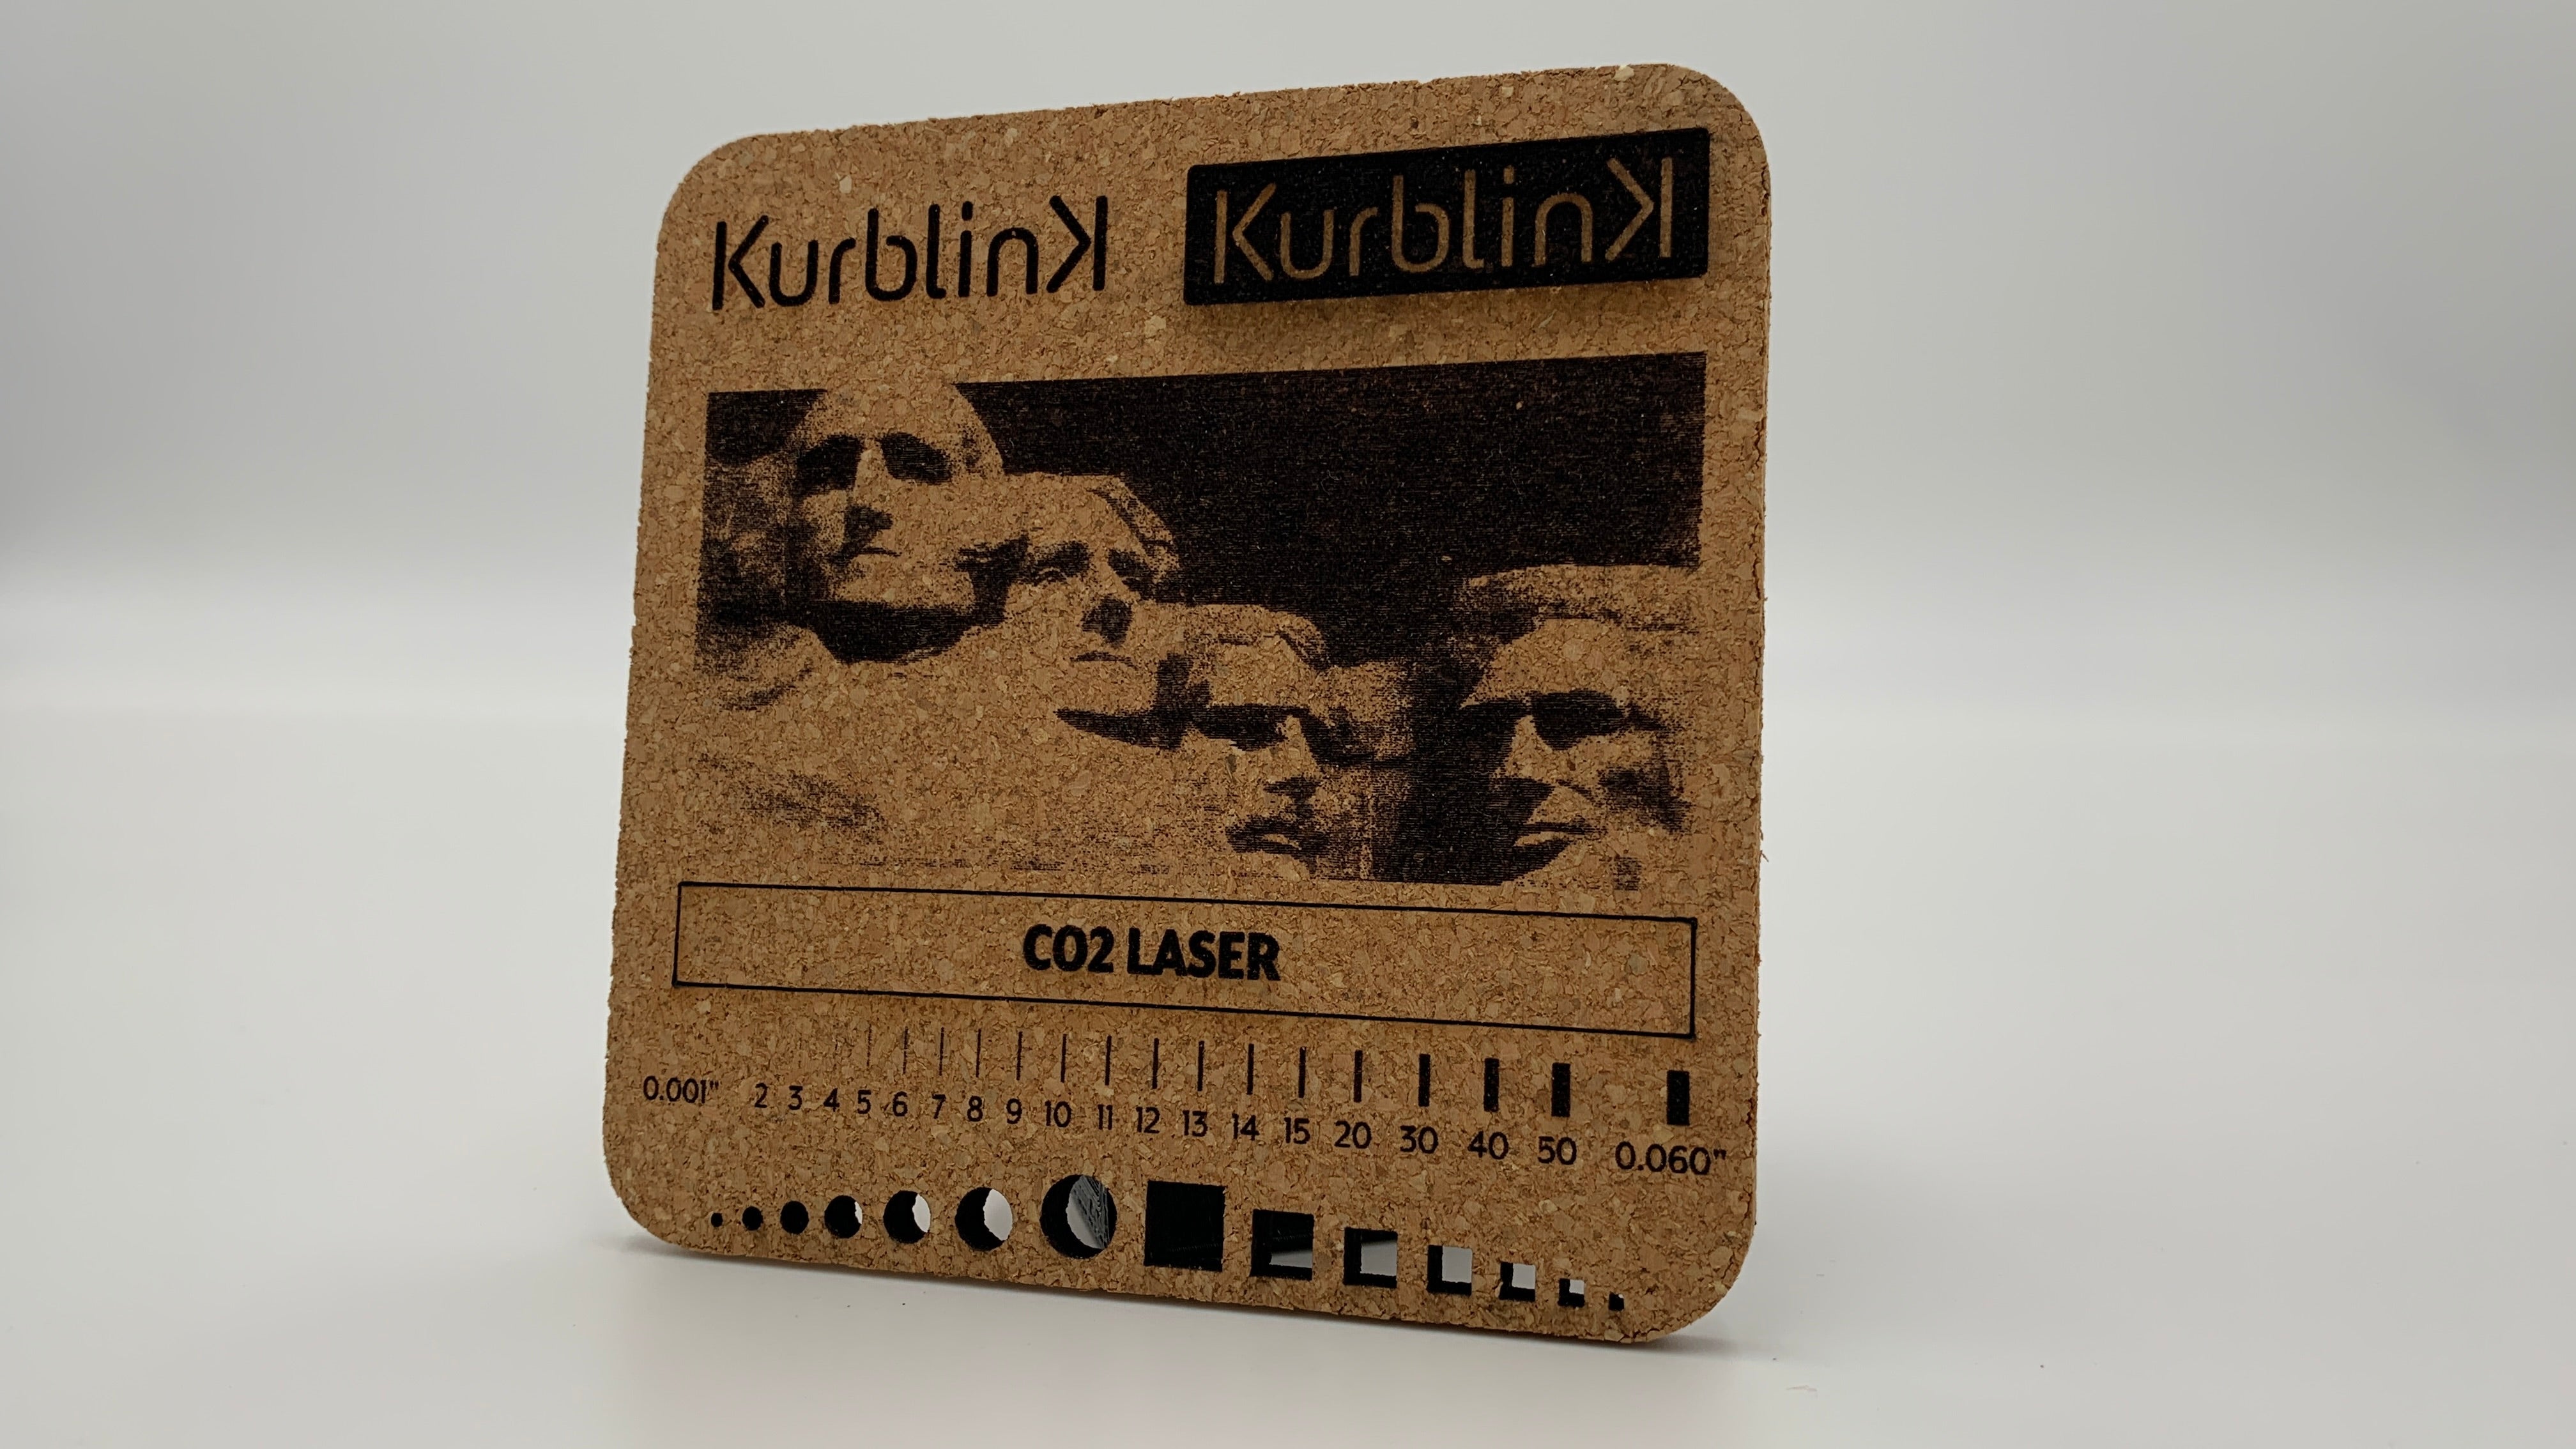 Cork sheet laser engraved and cut by Kurblink